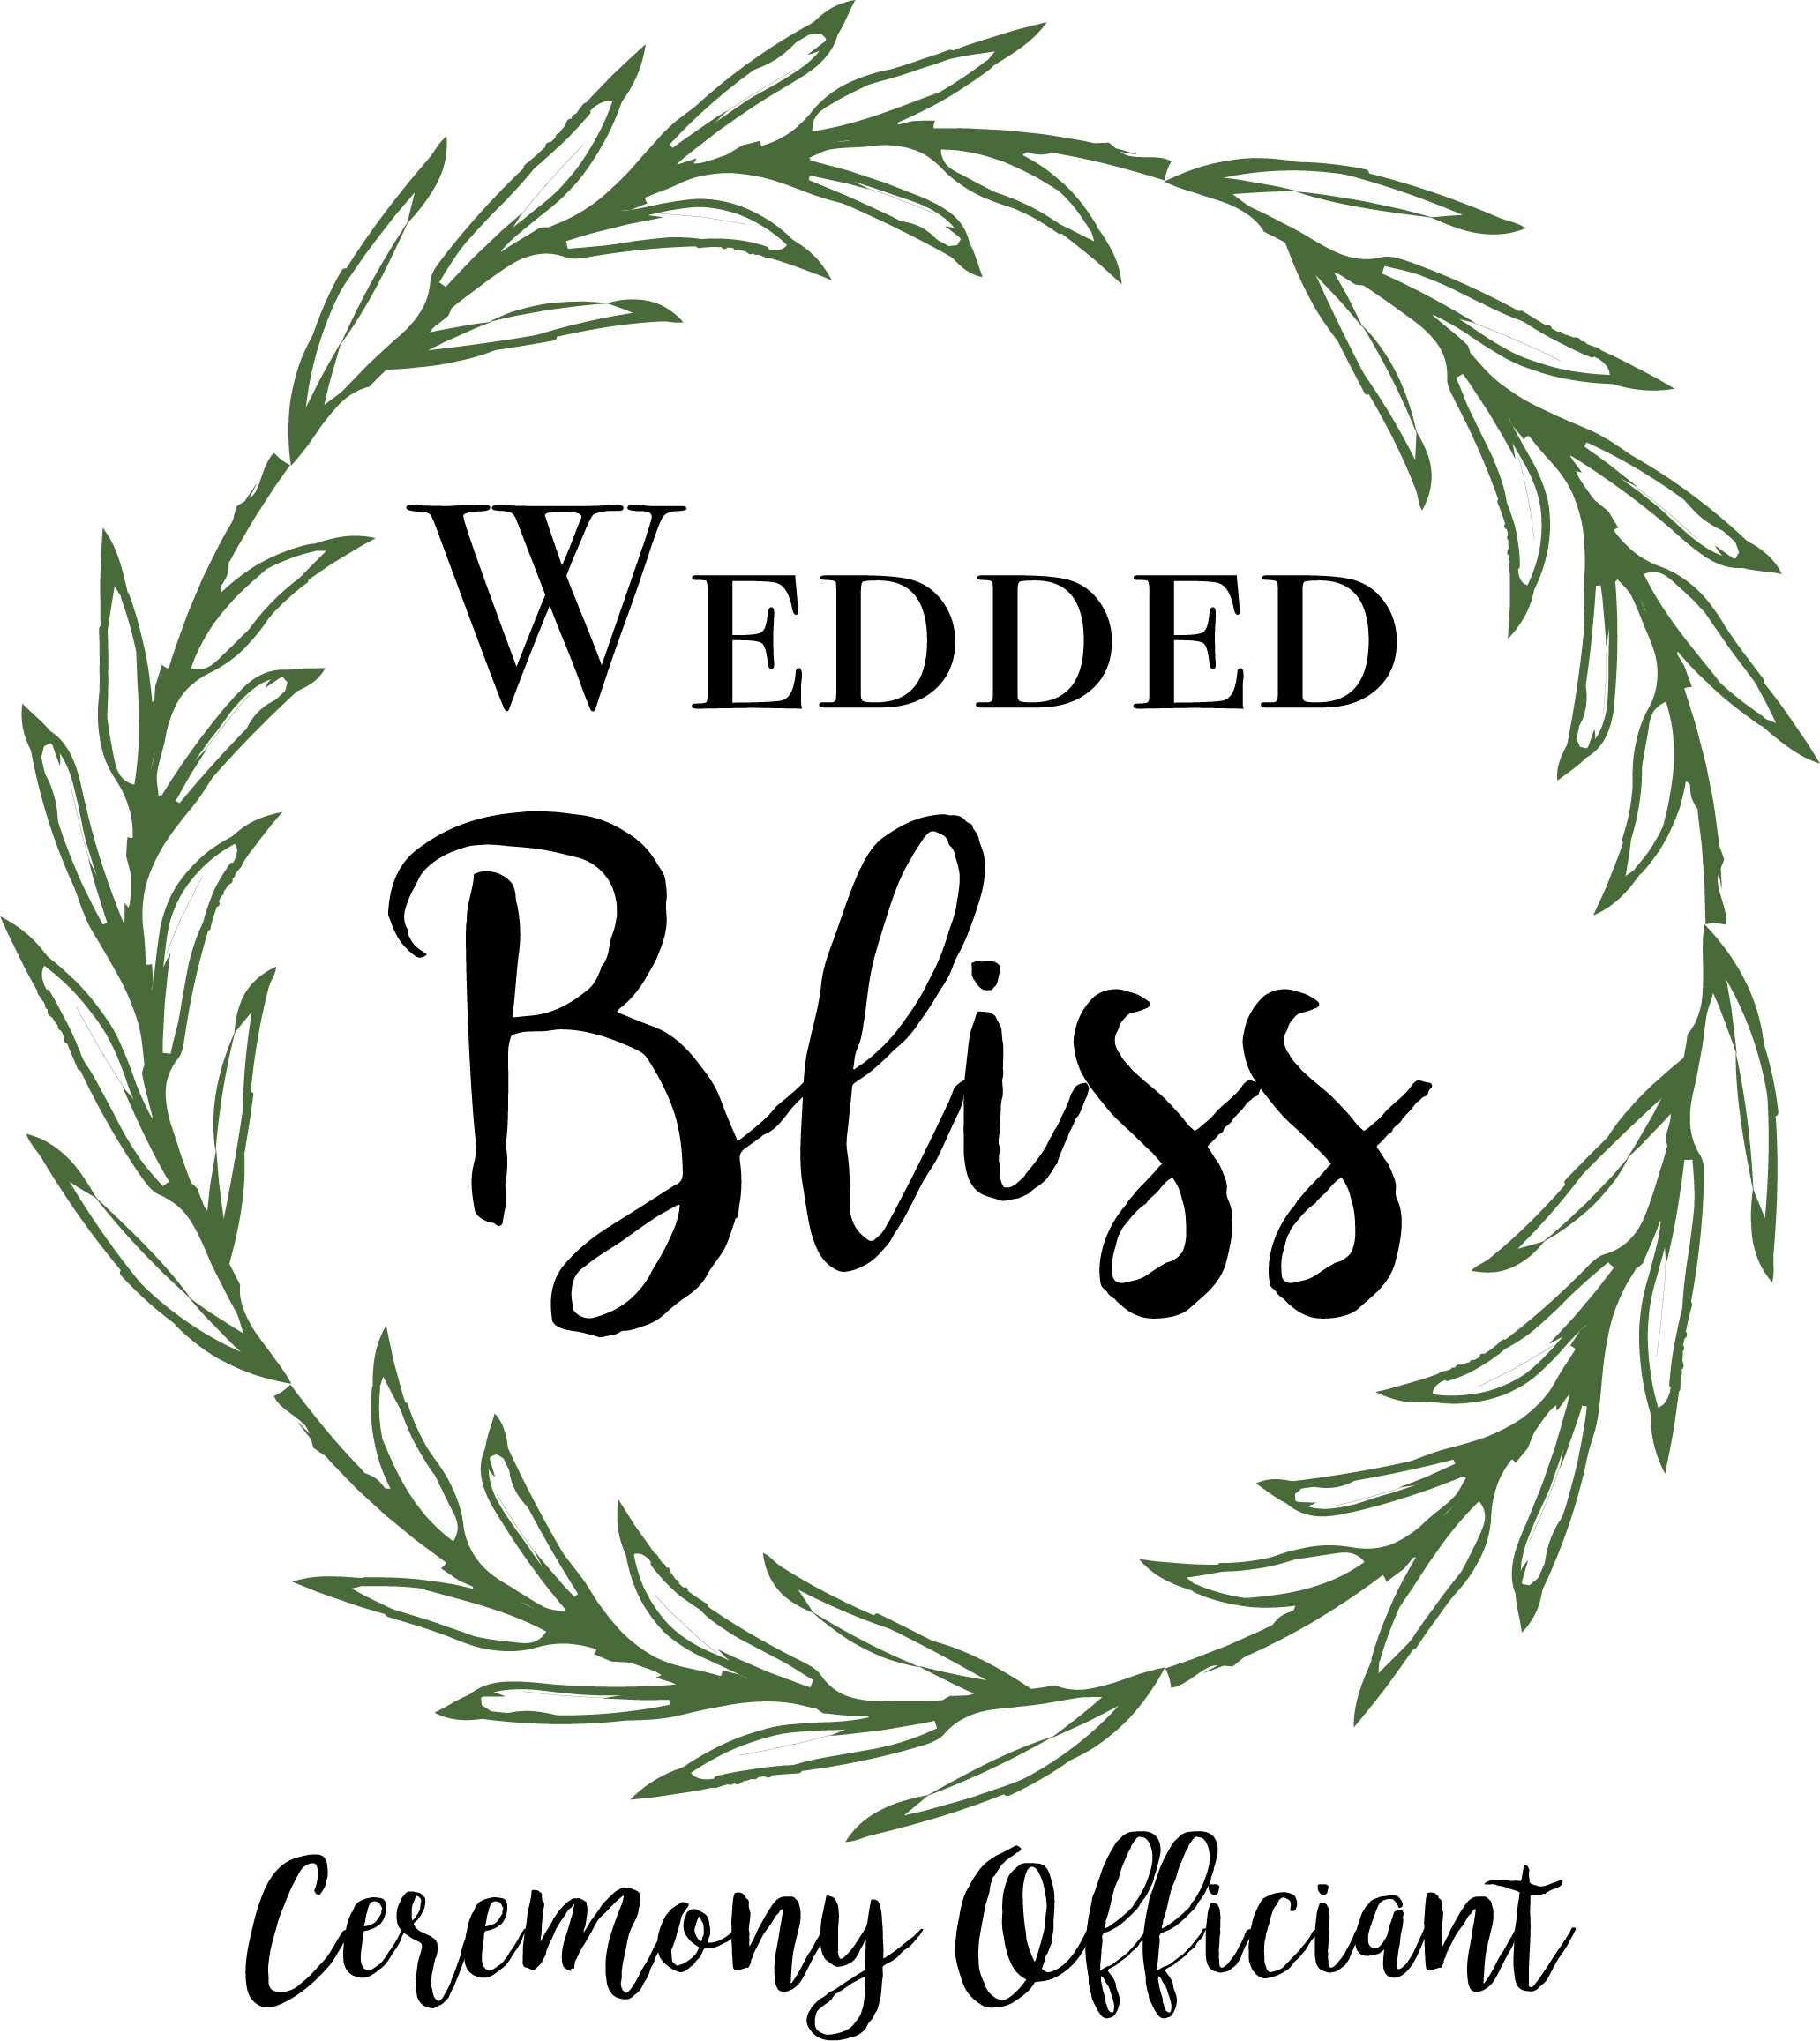 Wedded Bliss Logo - Color (RGB - Web Use) - Emily Peterson.jpg